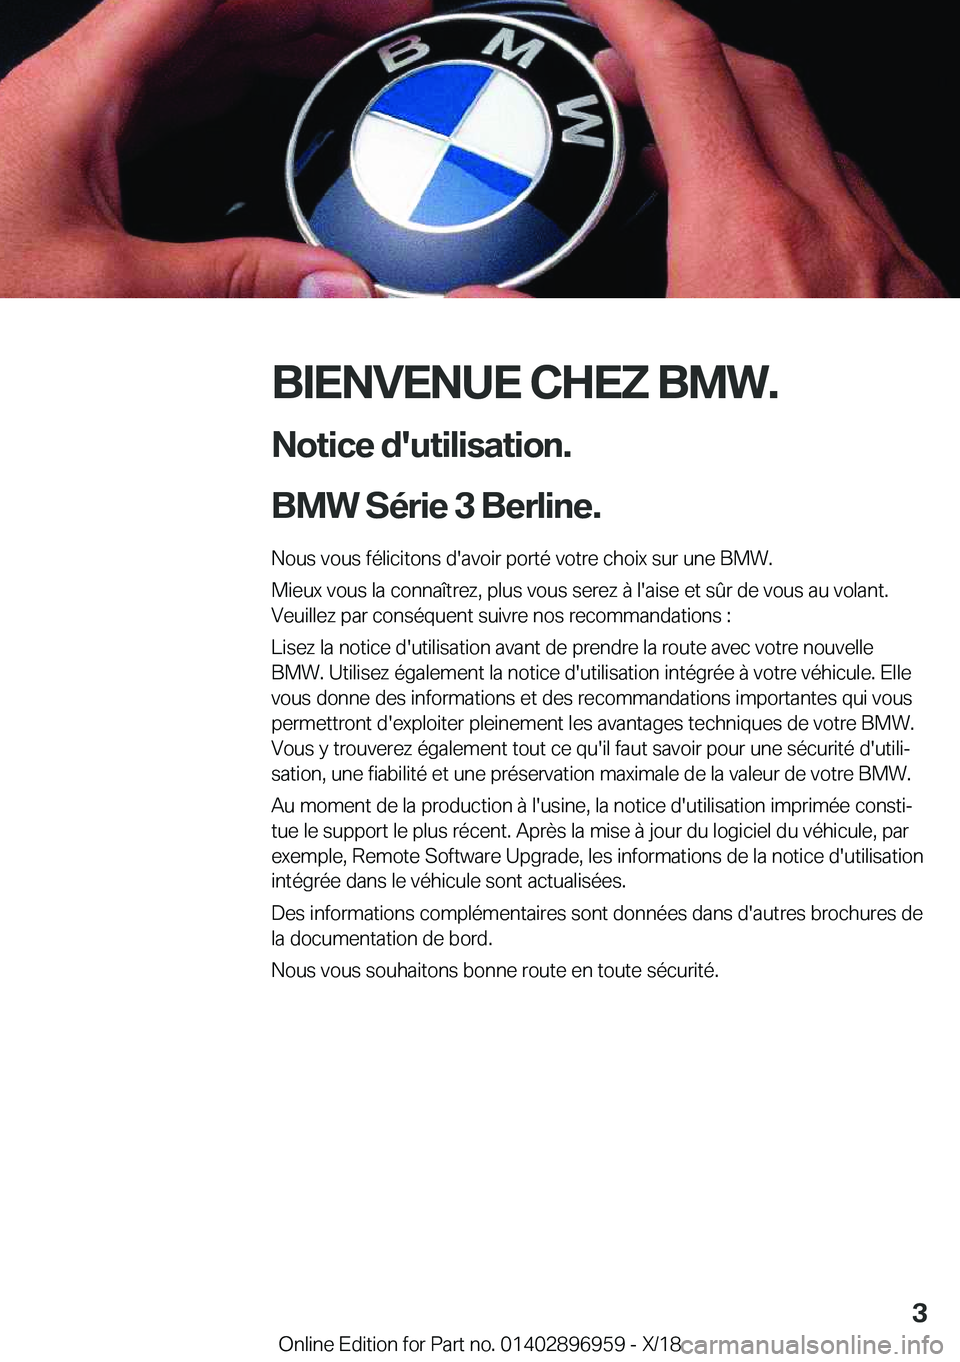 BMW 3 SERIES 2019  Notices Demploi (in French) �B�I�E�N�V�E�N�U�E��C�H�E�Z��B�M�W�.�N�o�t�i�c�e��d�'�u�t�i�l�i�s�a�t�i�o�n�.
�B�M�W��S�é�r�i�e��3��B�e�r�l�i�n�e�.
�N�o�u�s��v�o�u�s��f�é�l�i�c�i�t�o�n�s��d�'�a�v�o�i�r��p�o�r�t��